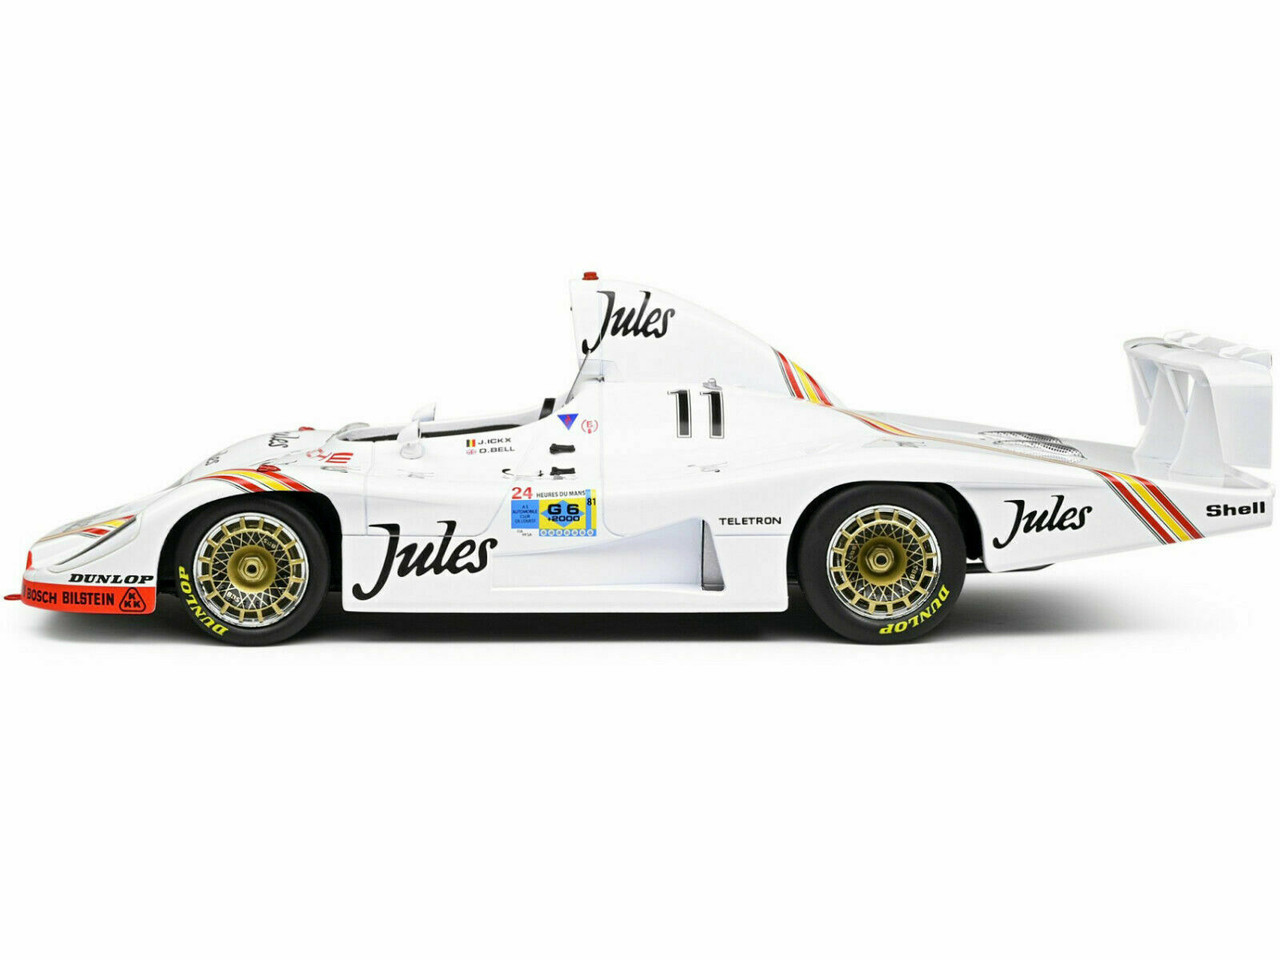 1/18 Solido Porsche 936 24H Le Mans 1981 #11 Bell Ickx (White) Diecast Car Model